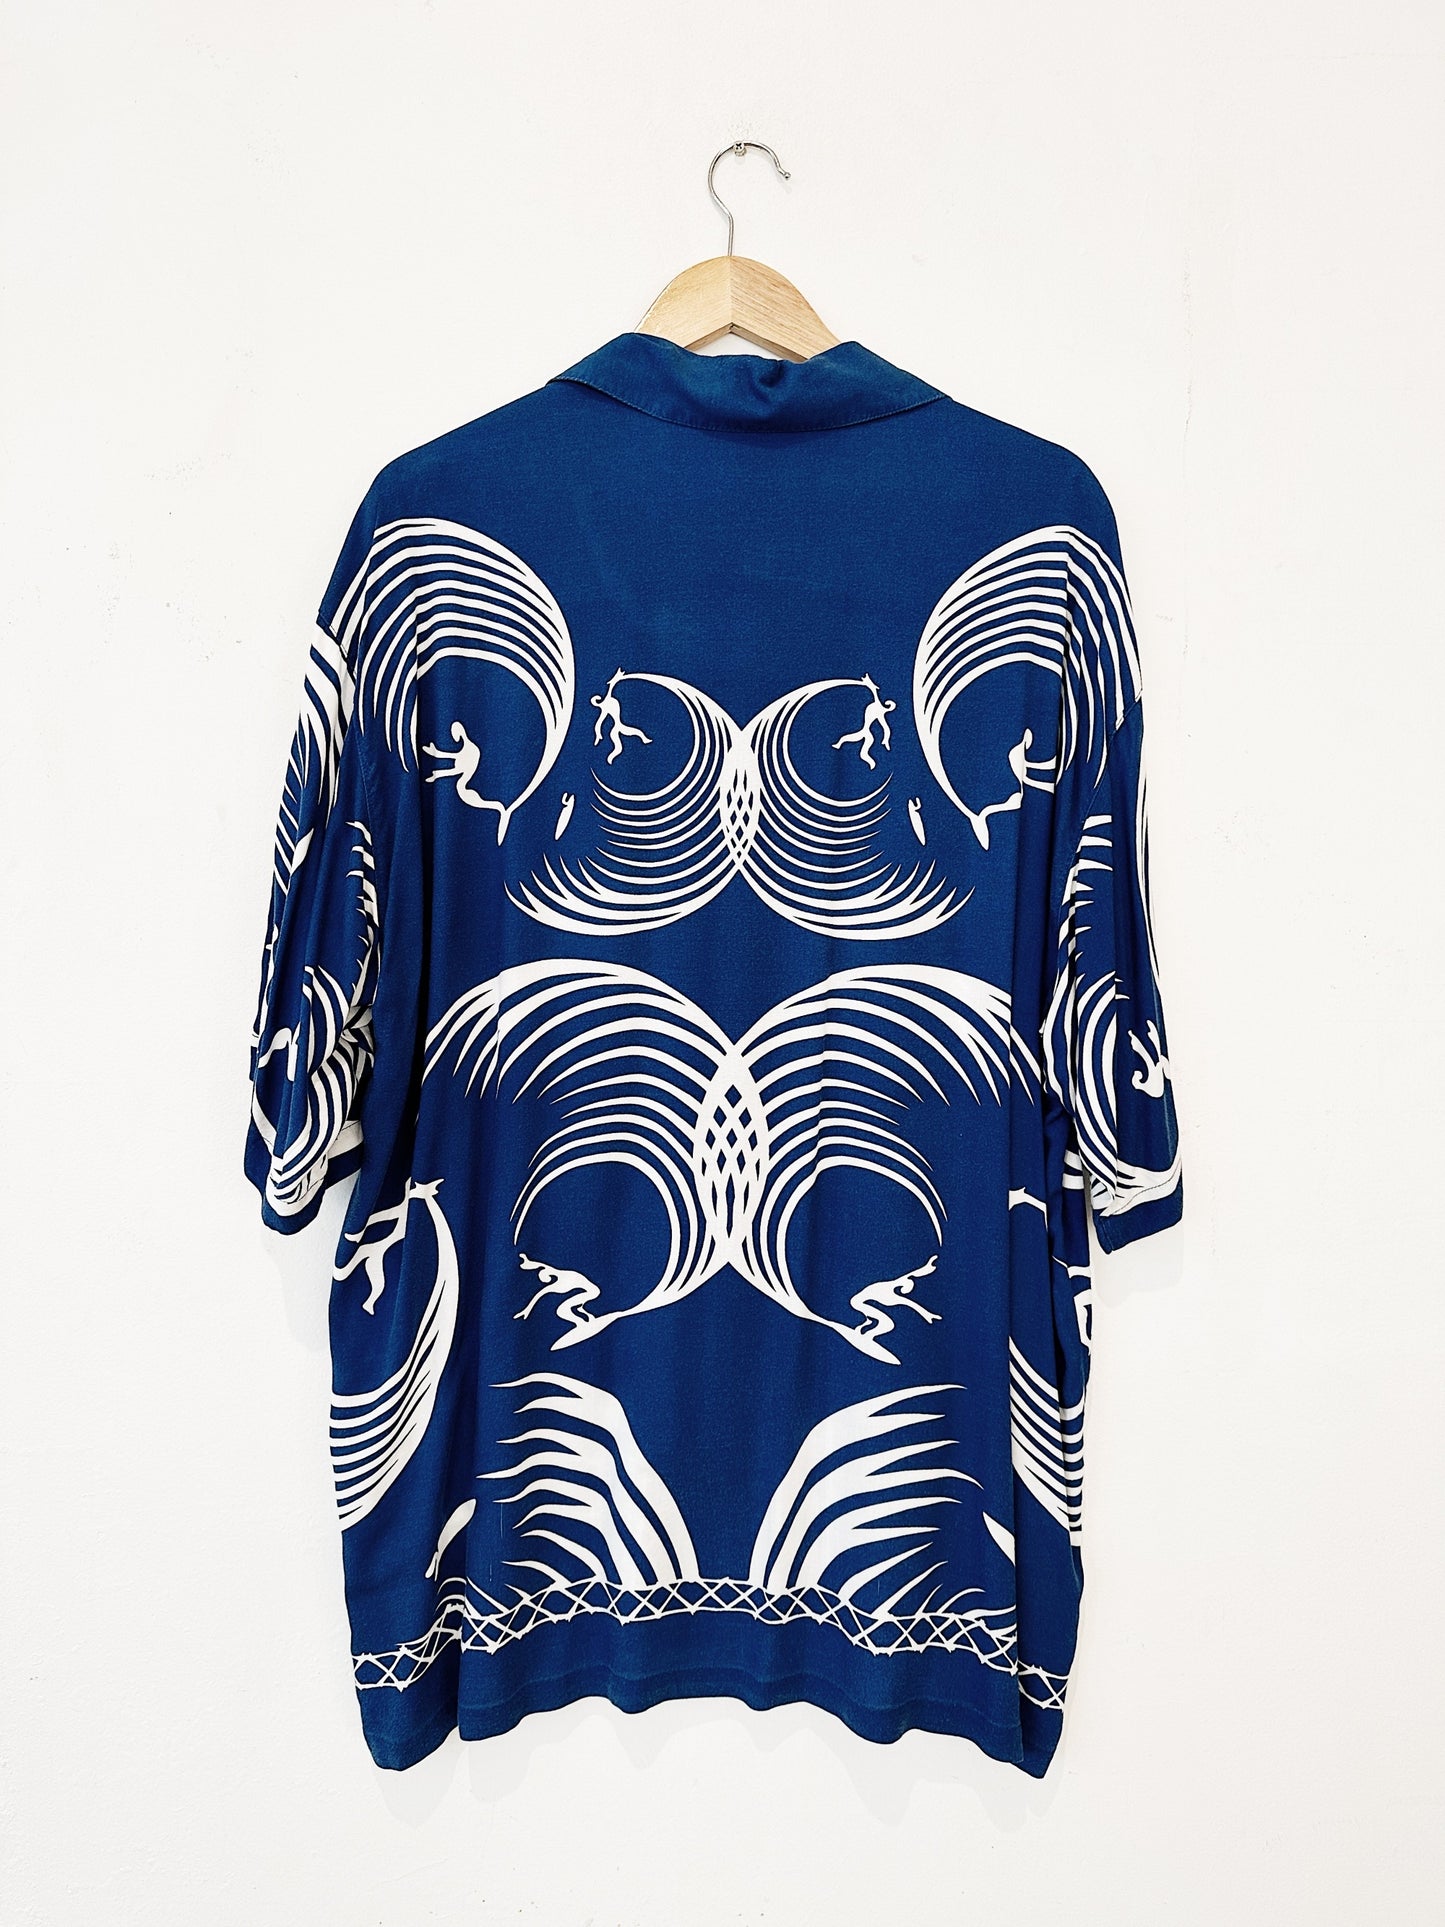 Paul McNeil "Batik Surf" Vintage Mambo Loud Shirt (Blue) 58